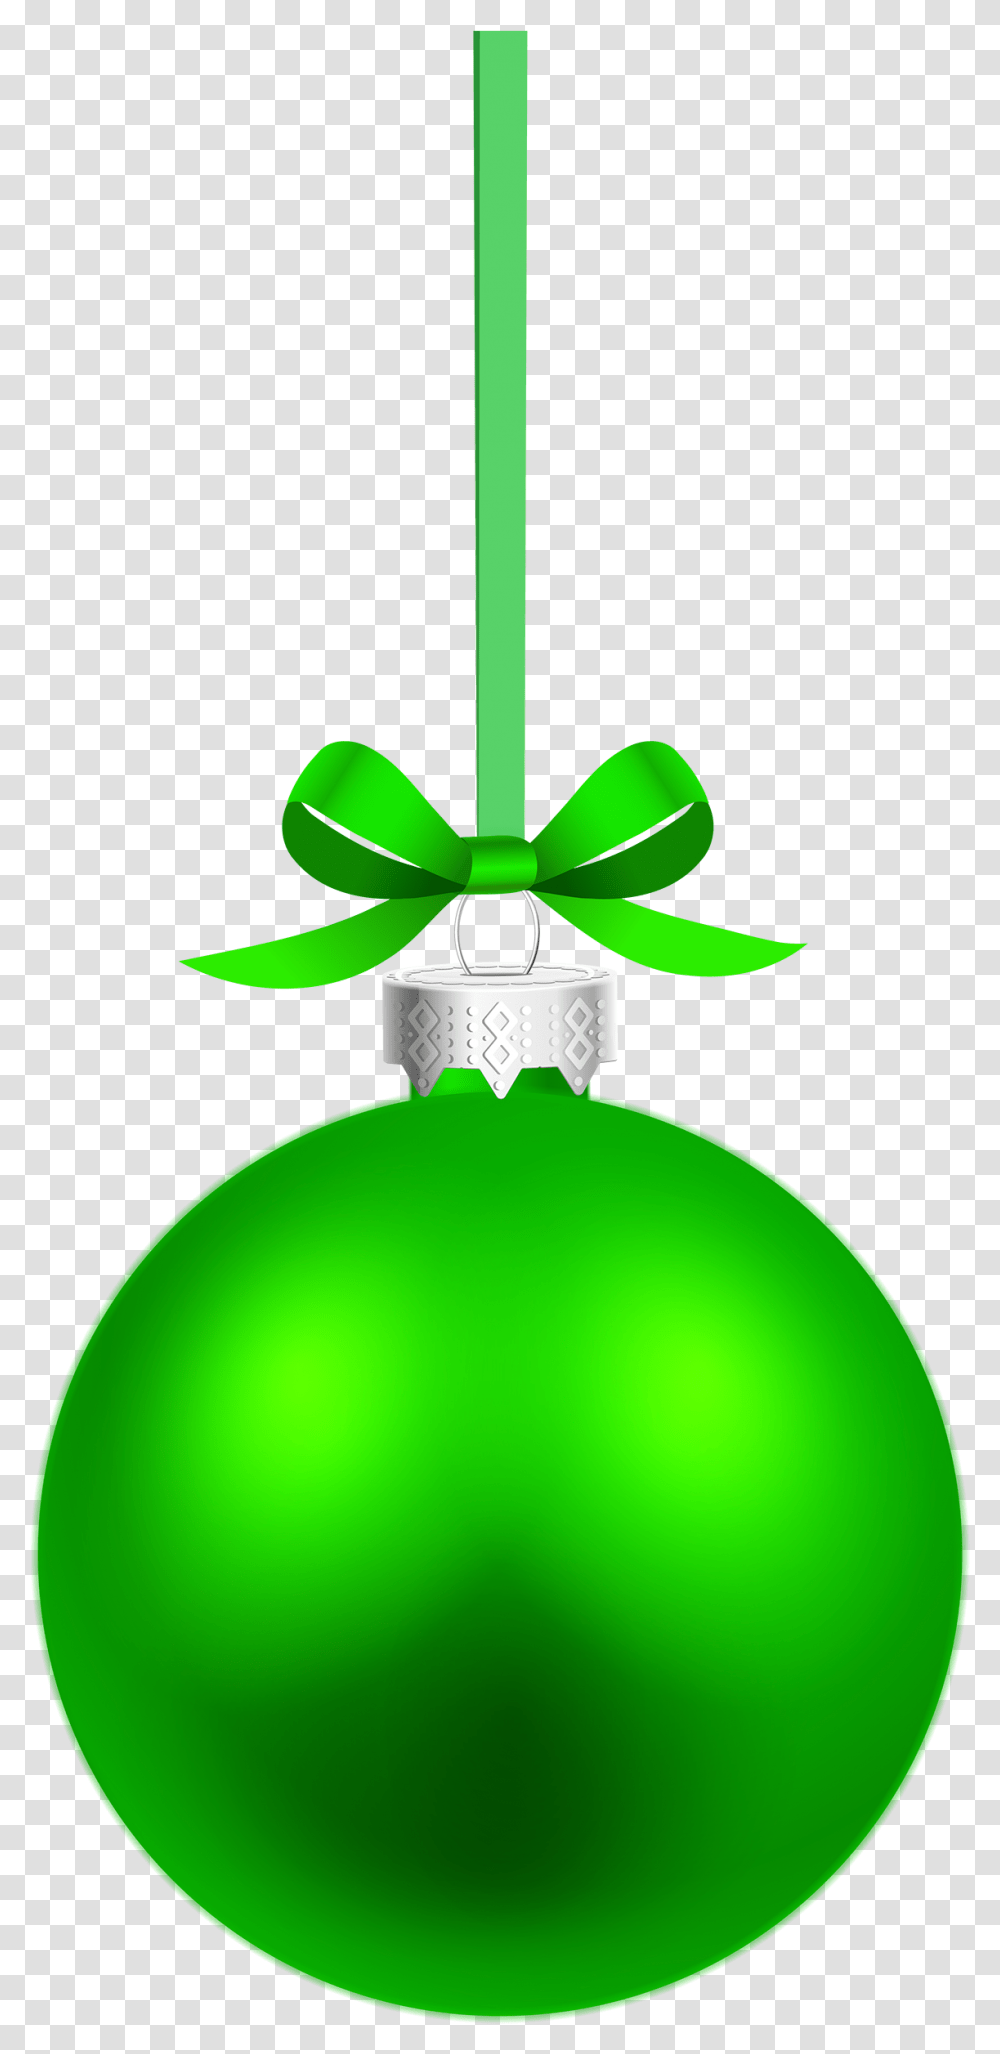 Green Hanging Christmas Ball Clipart Green Hanging Christmas Ball Transparent Png